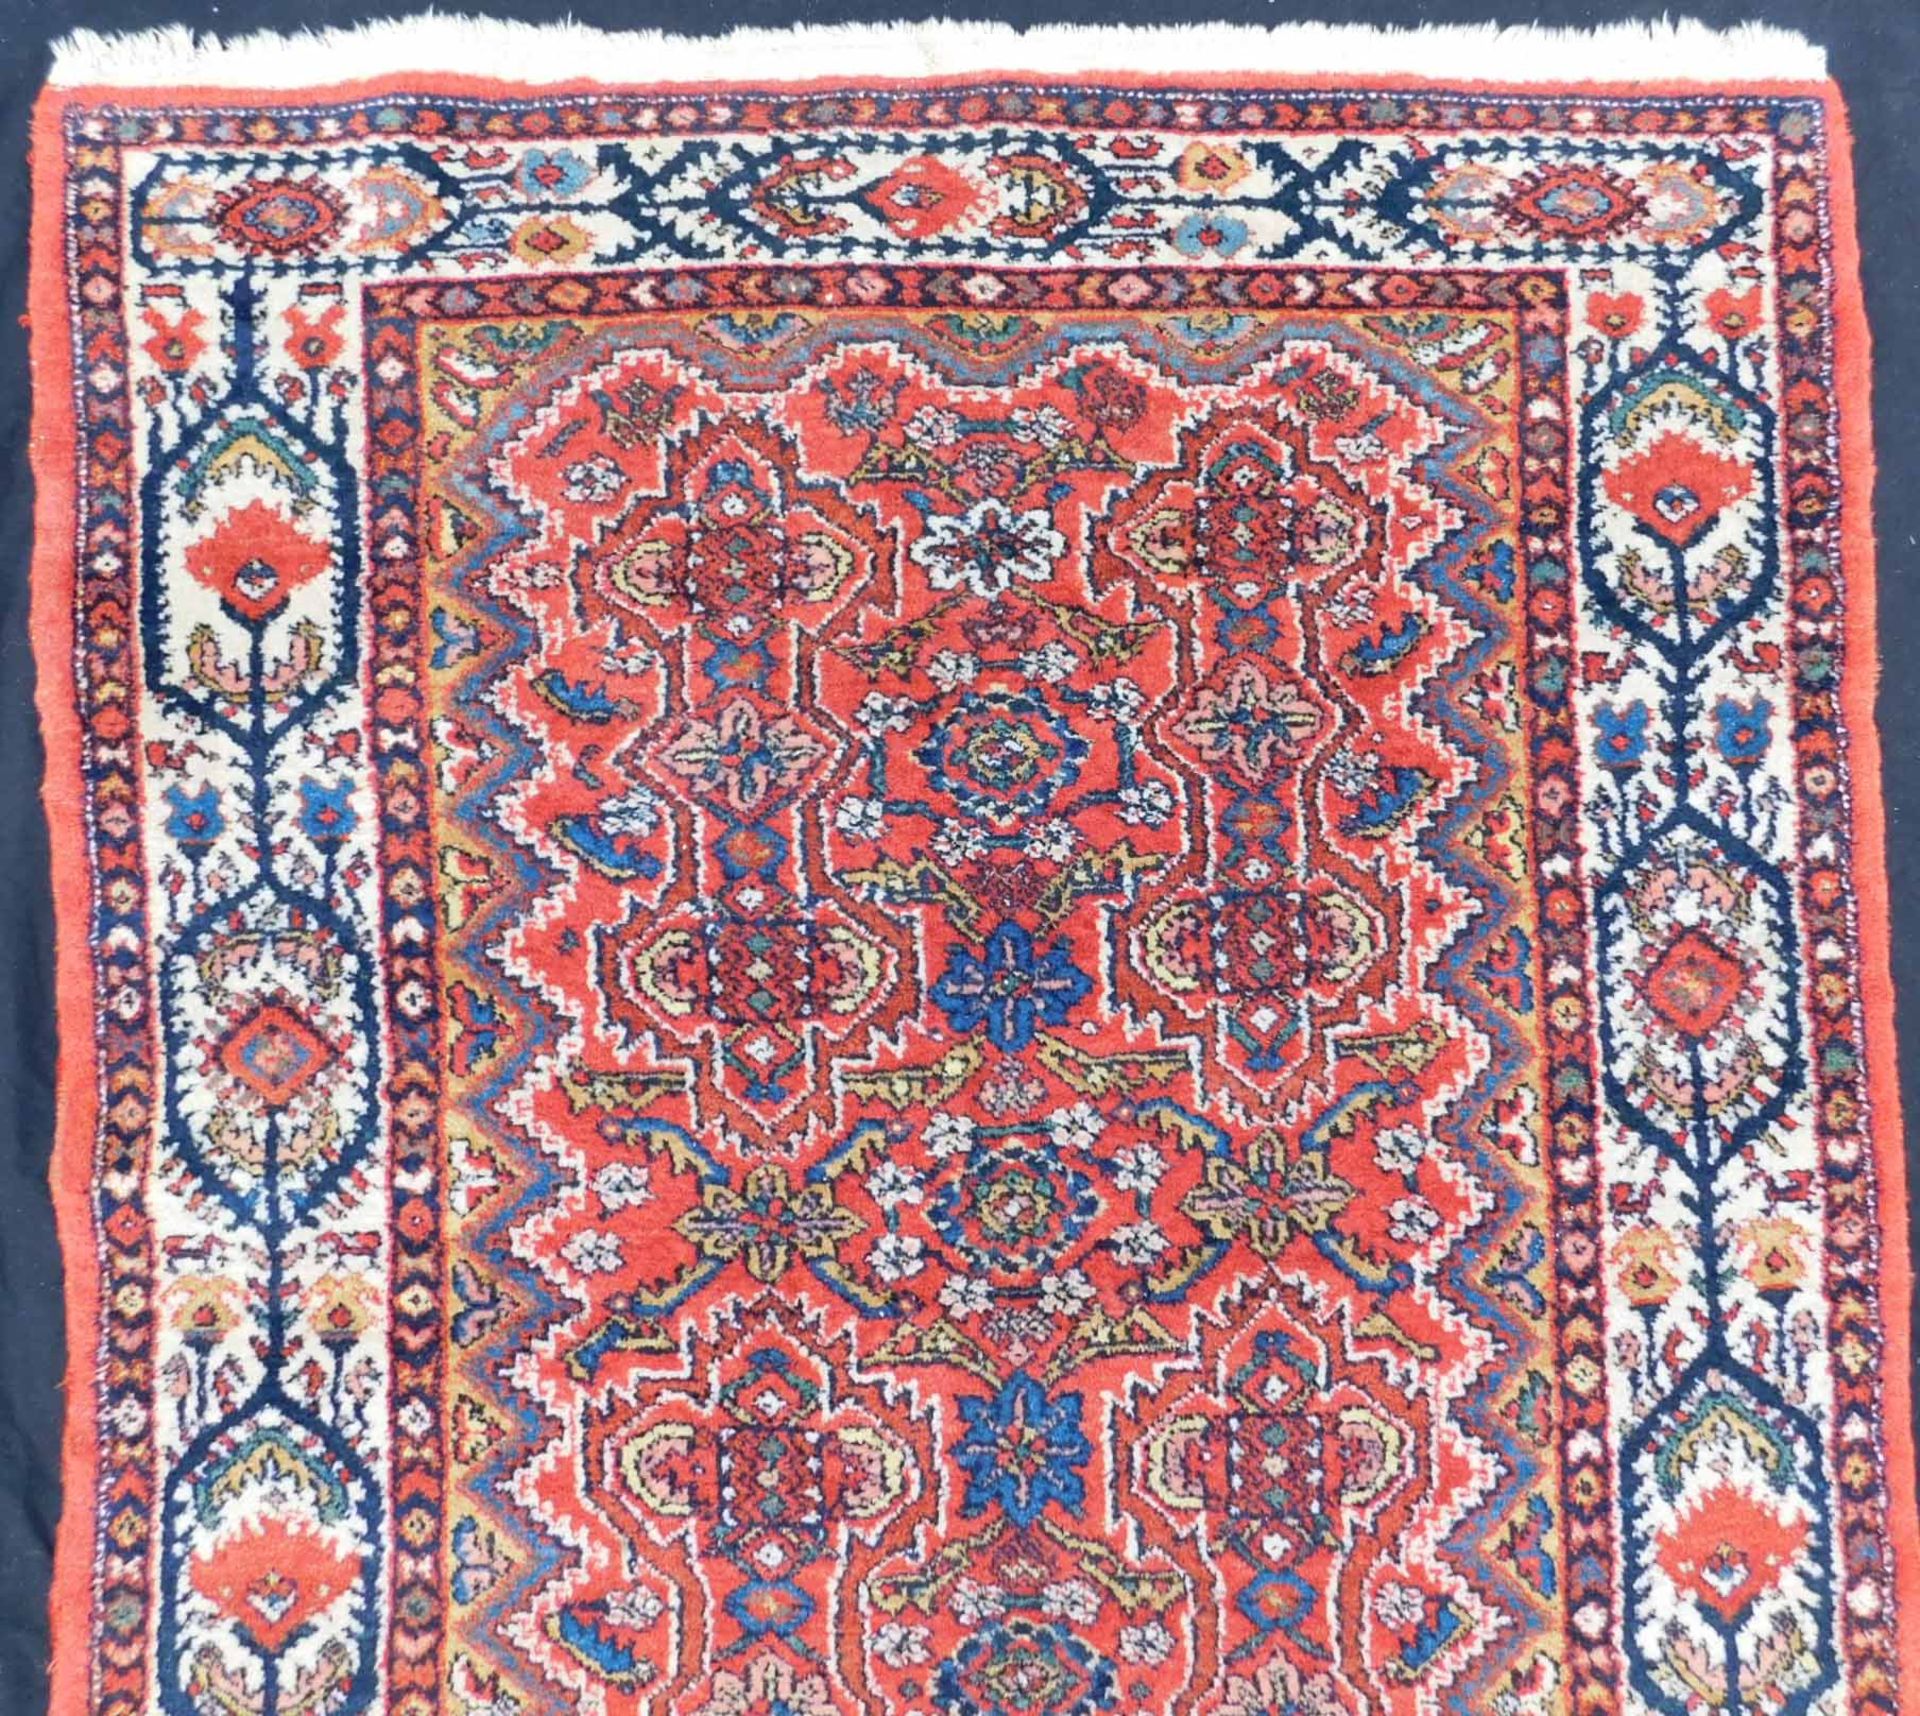 Hamadan Persian carpet. Iran. Antique, around 80 - 120 years old. Natural colors. - Image 3 of 4